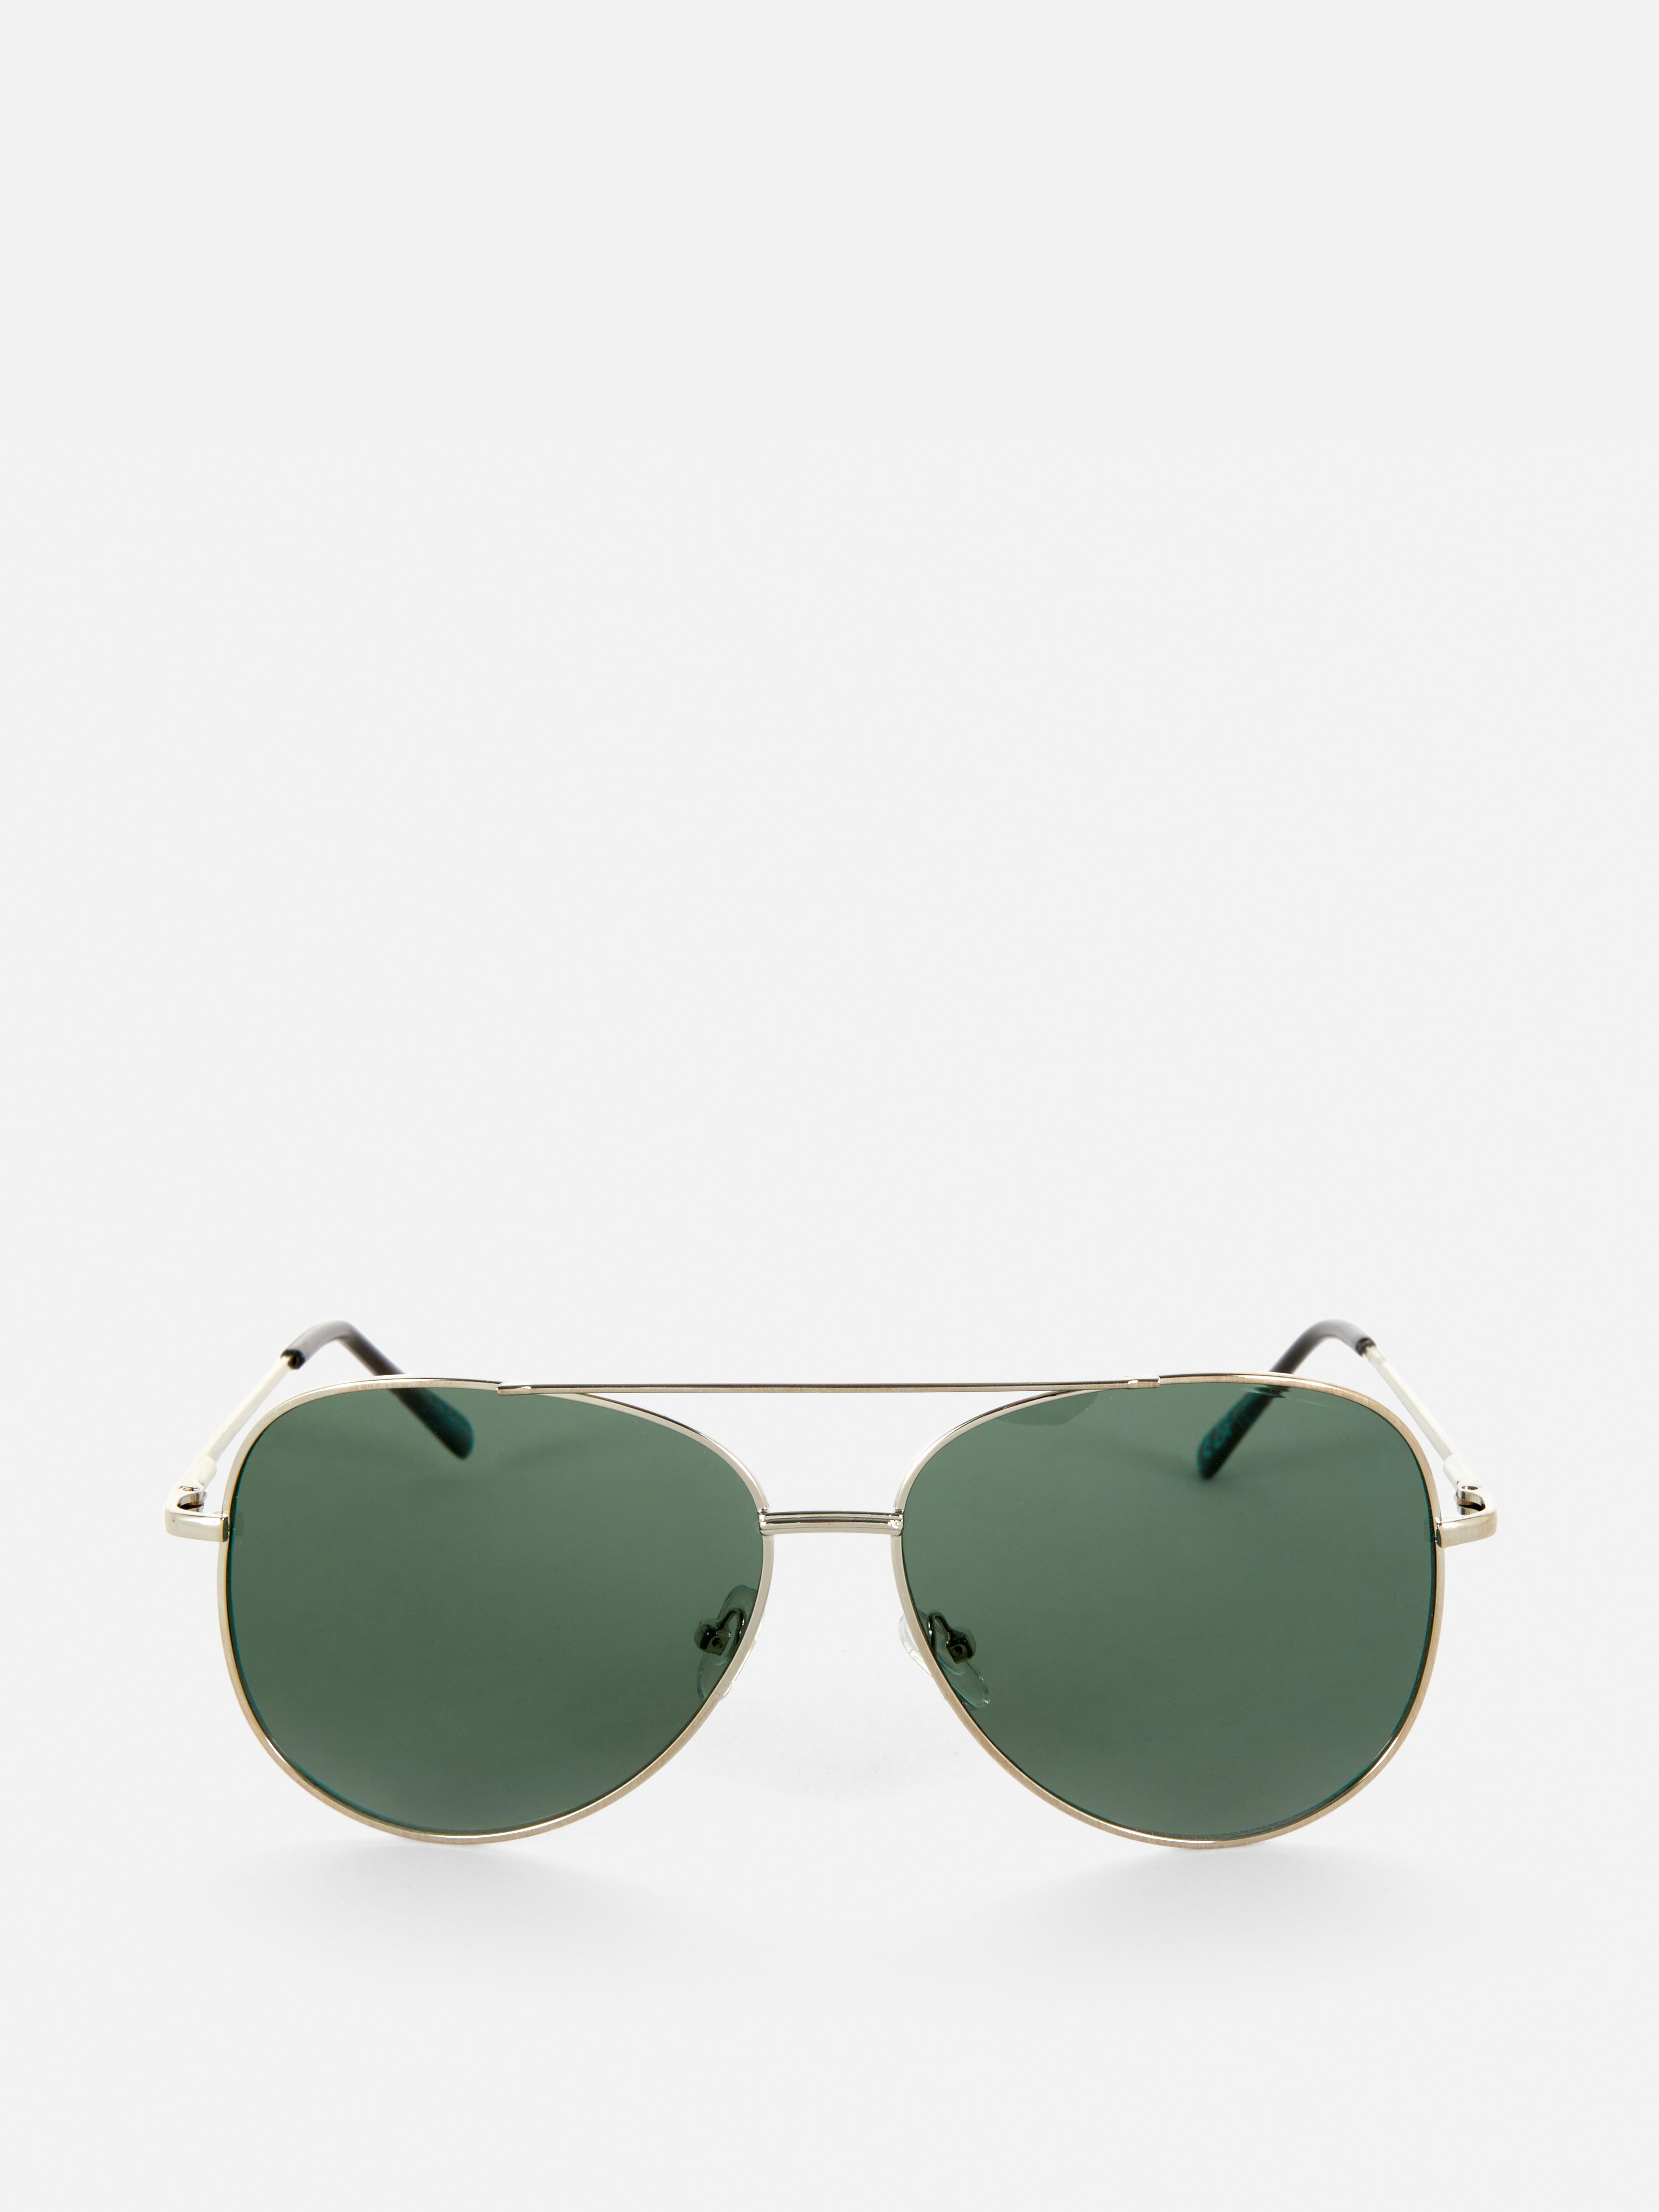 Wire Rim Tinted Sunglasses